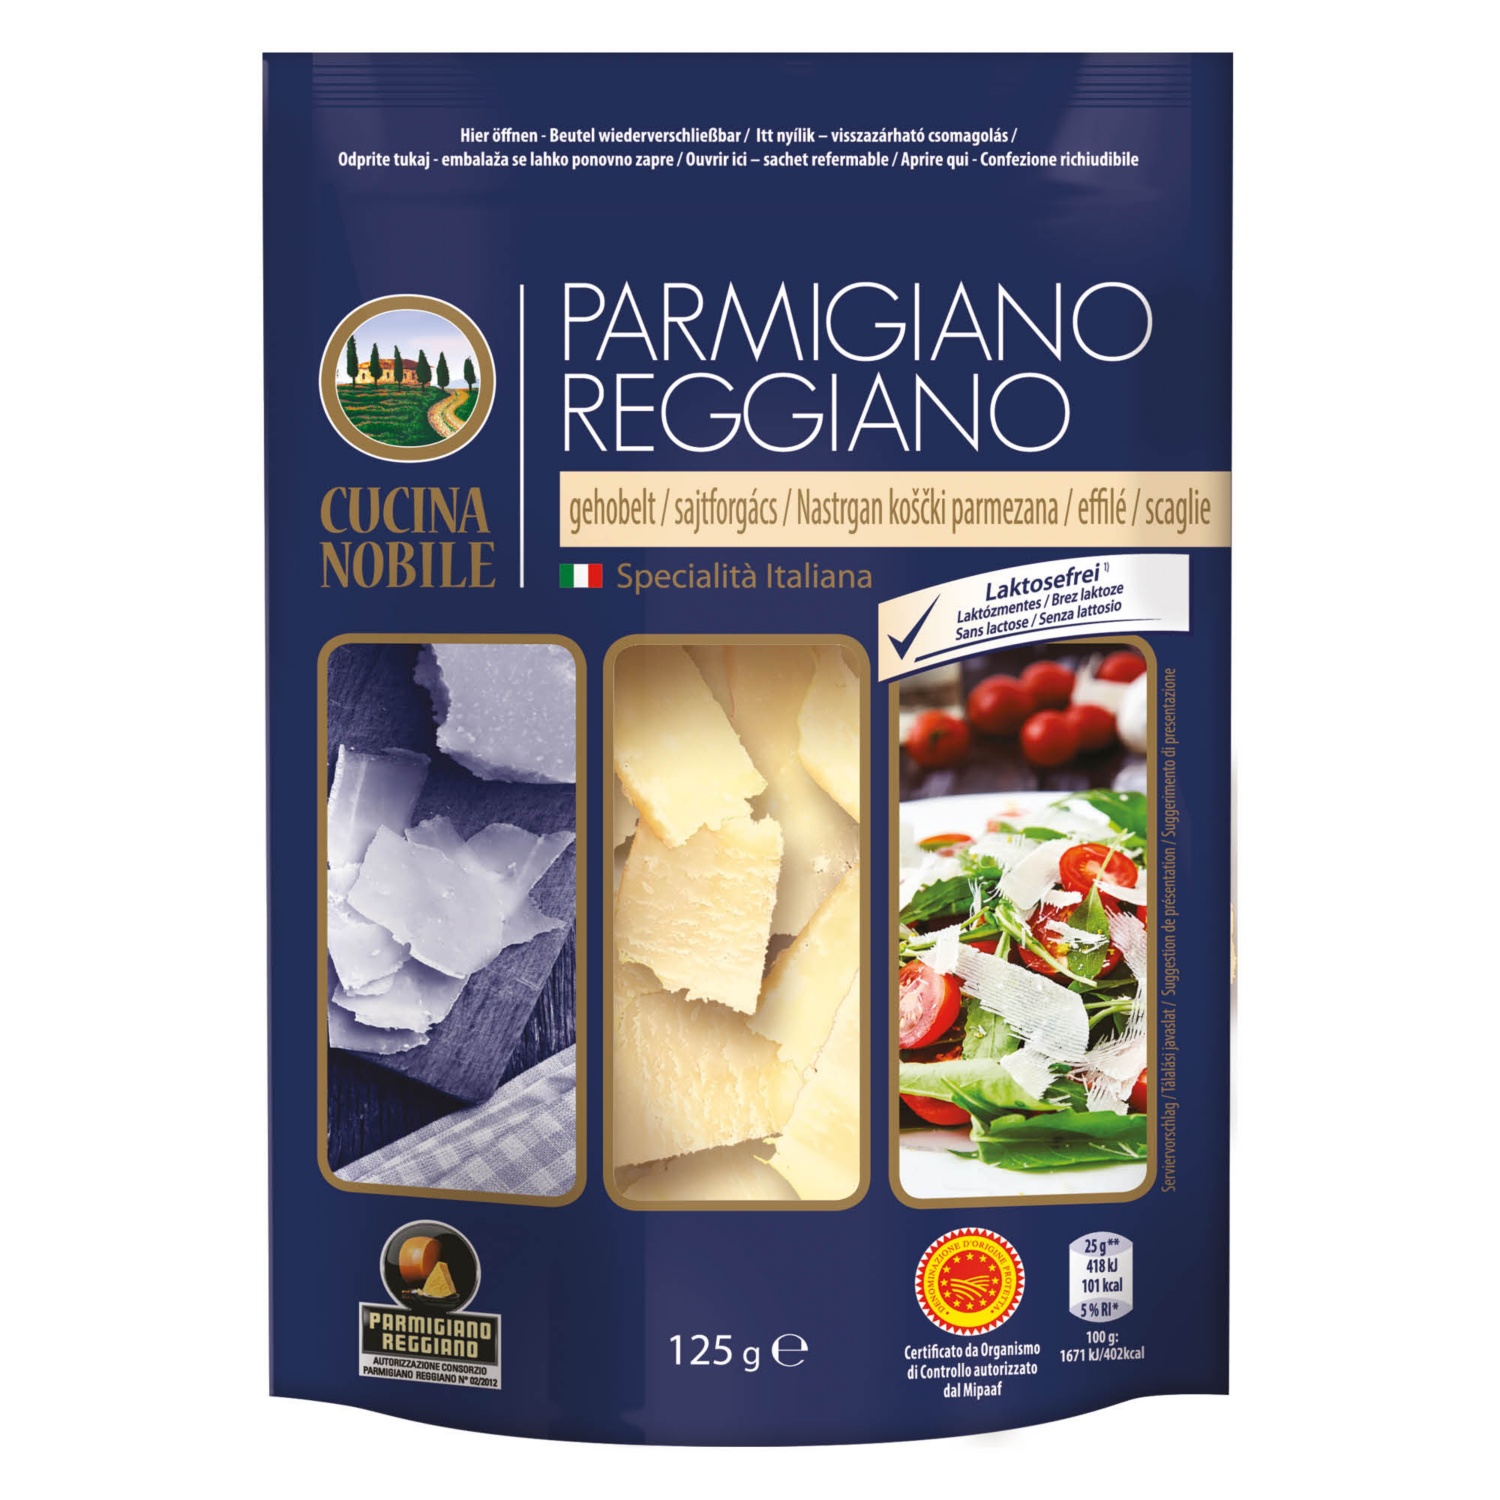 CUCINA NOBILE Parmigiano Reggiano, 125 g